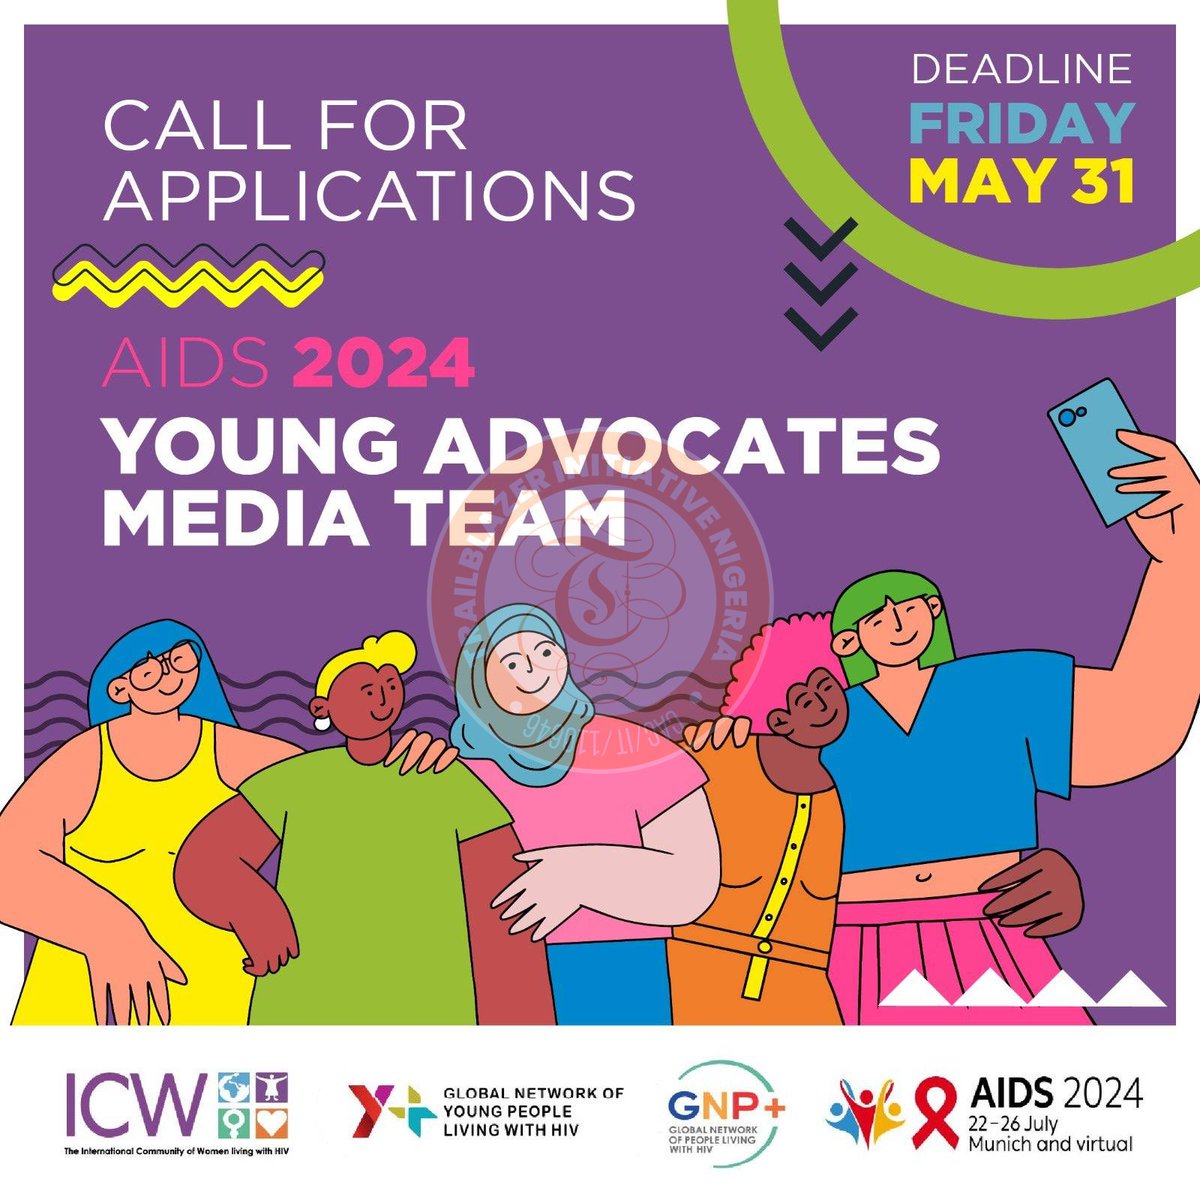 CALL FOR APPLICATION: AIDS 2024 Young Advocates Media Team trailblazerinitiative.org.ng/call-for-appli…